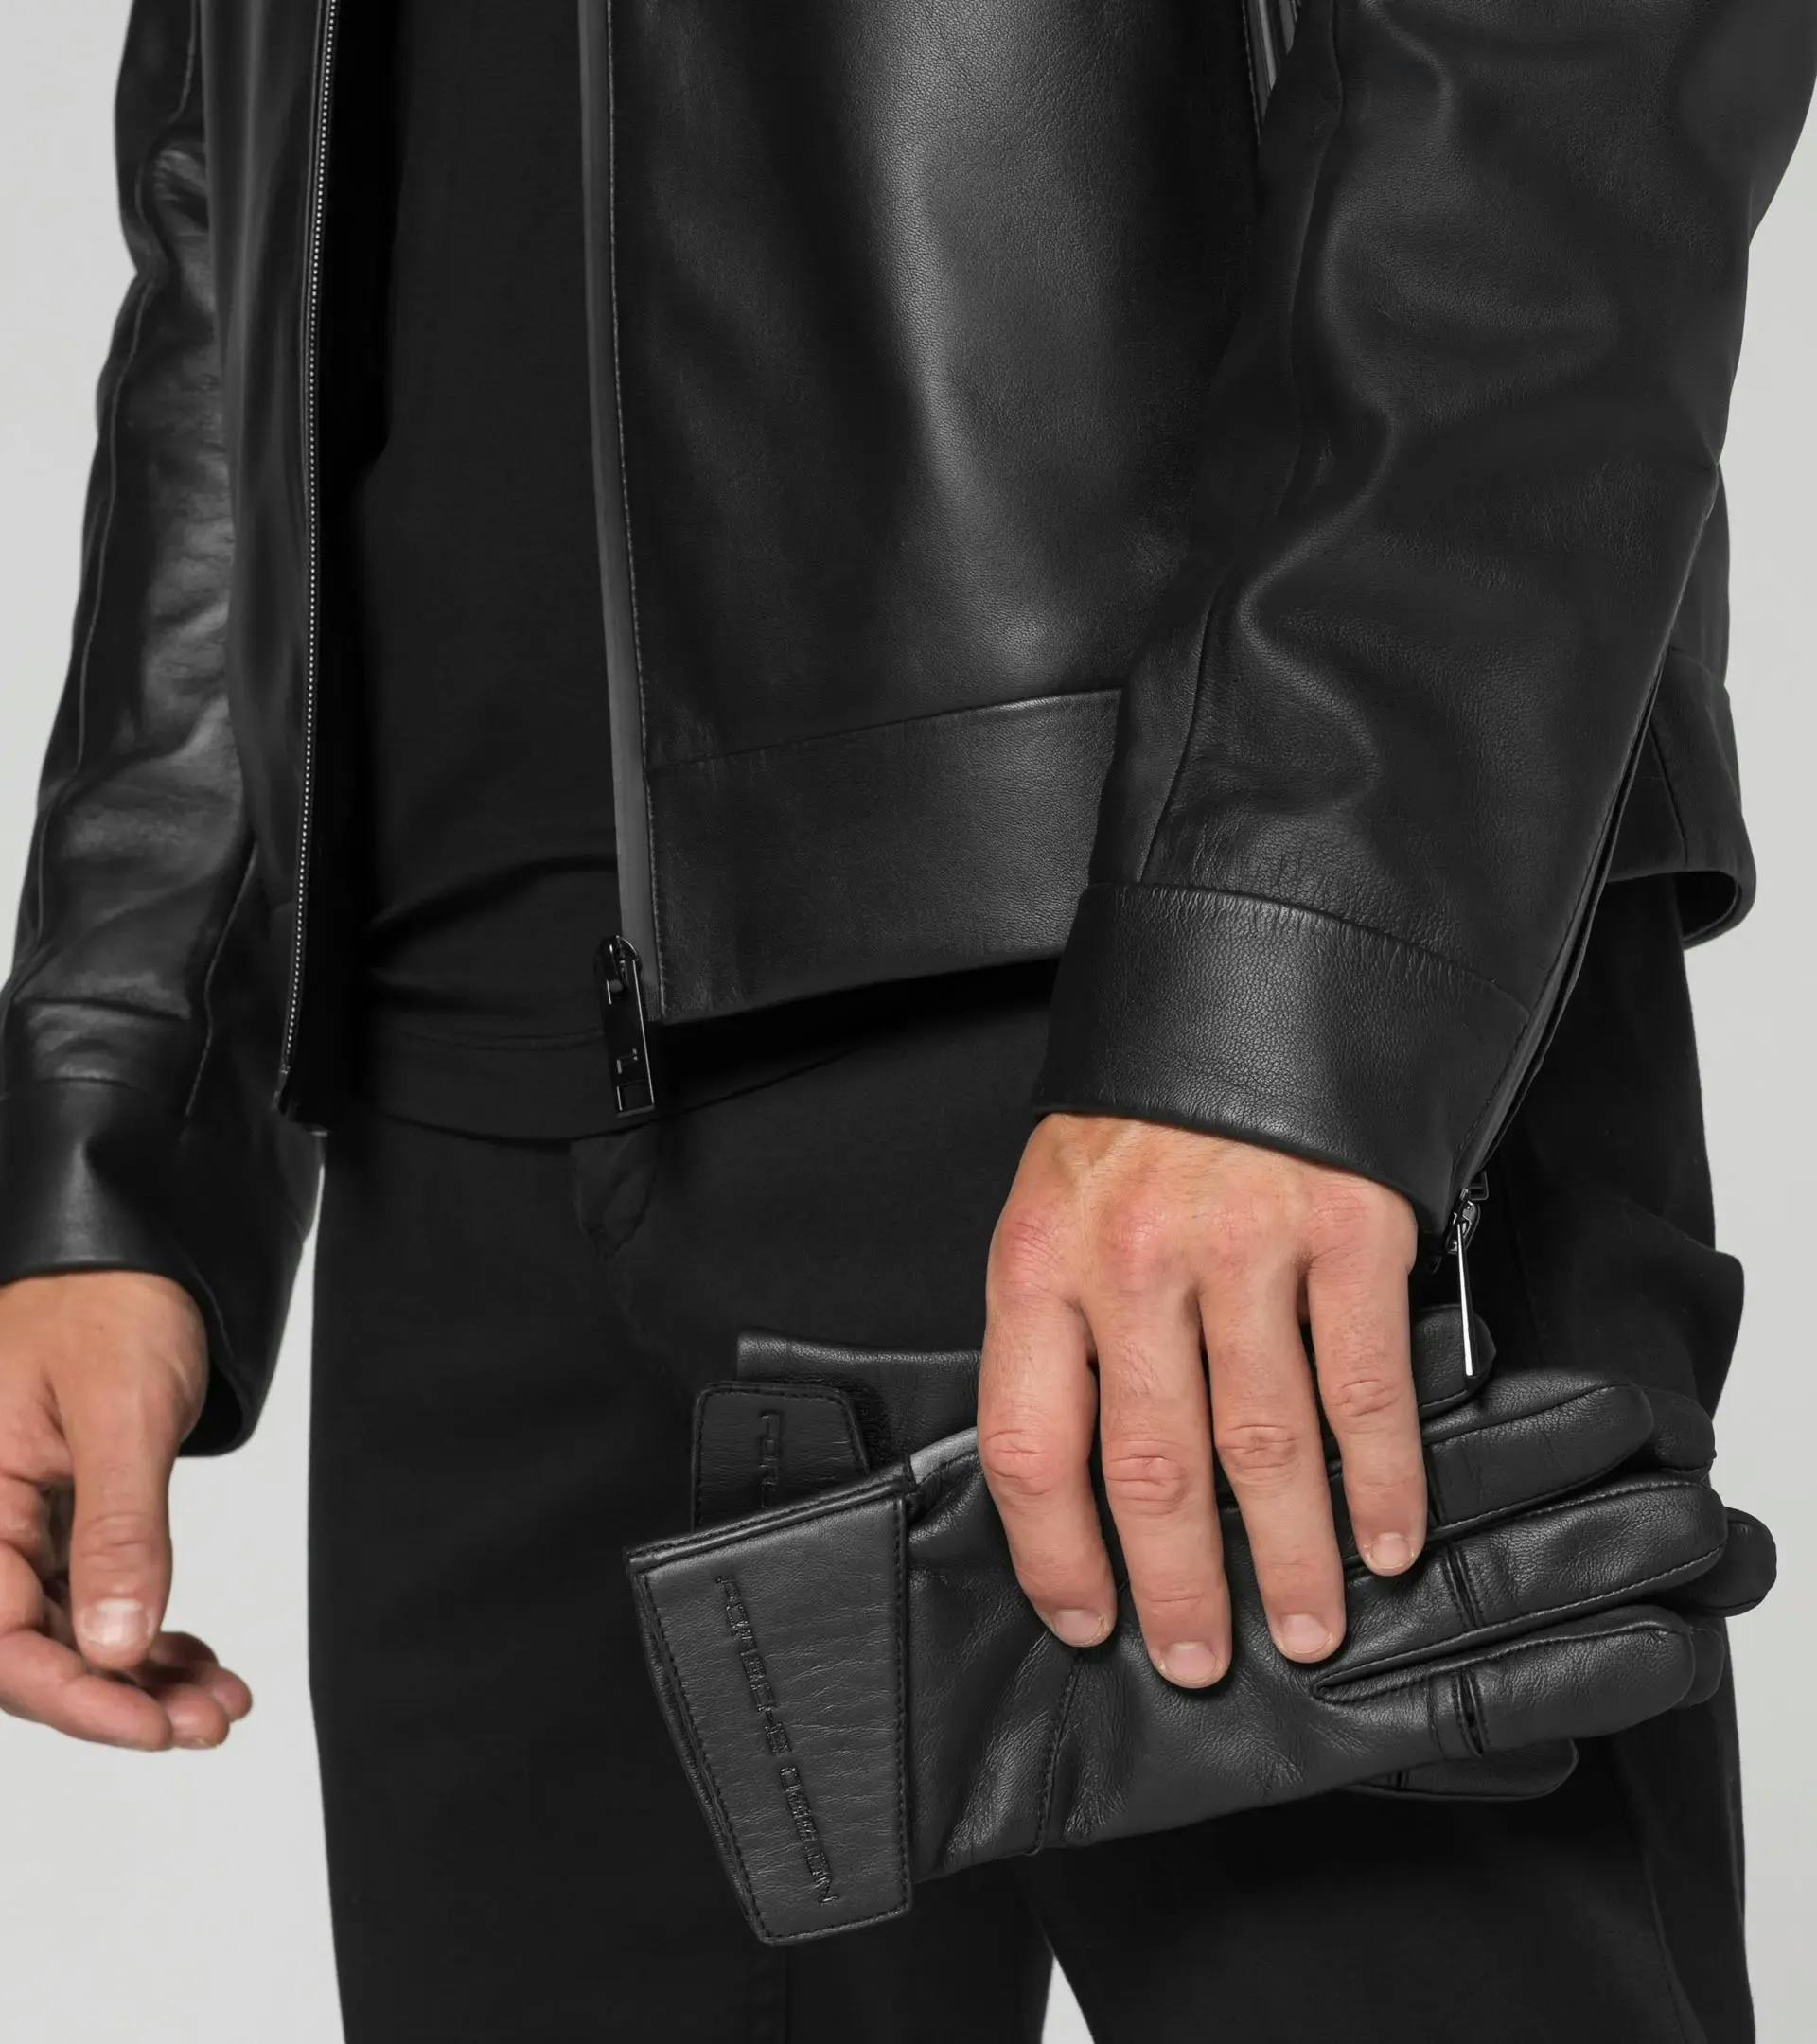 Gants en cuir noir spécial smartphone femme - Maroquinerie en ligne